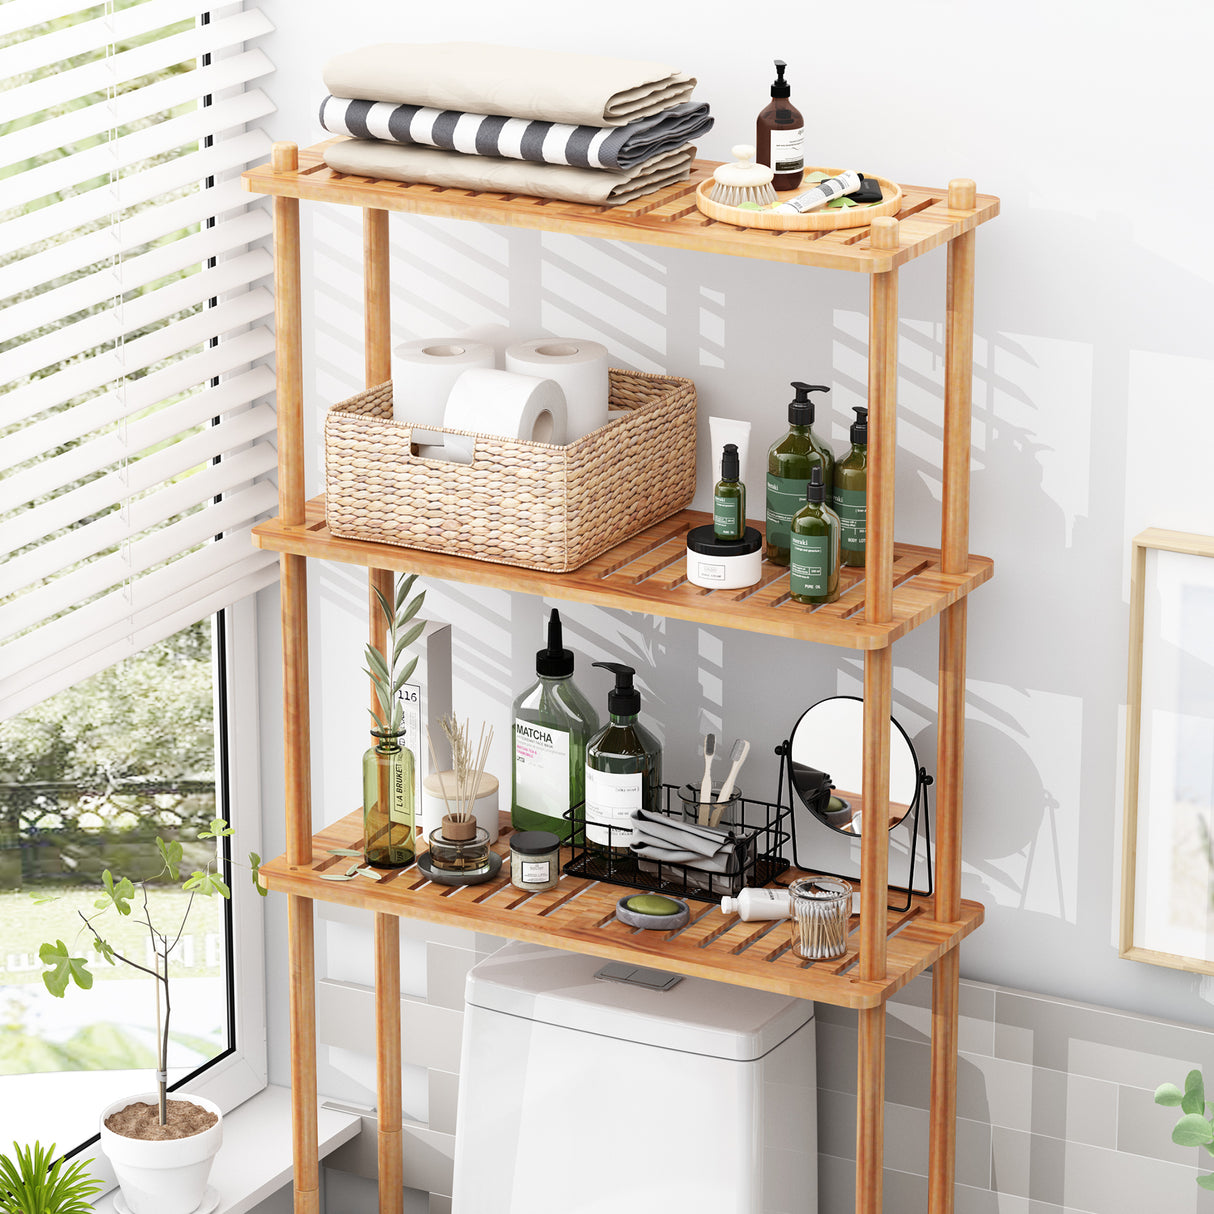 Bamboo Spice Rack Storage Shelves-3 tier Standing pantry Shelf